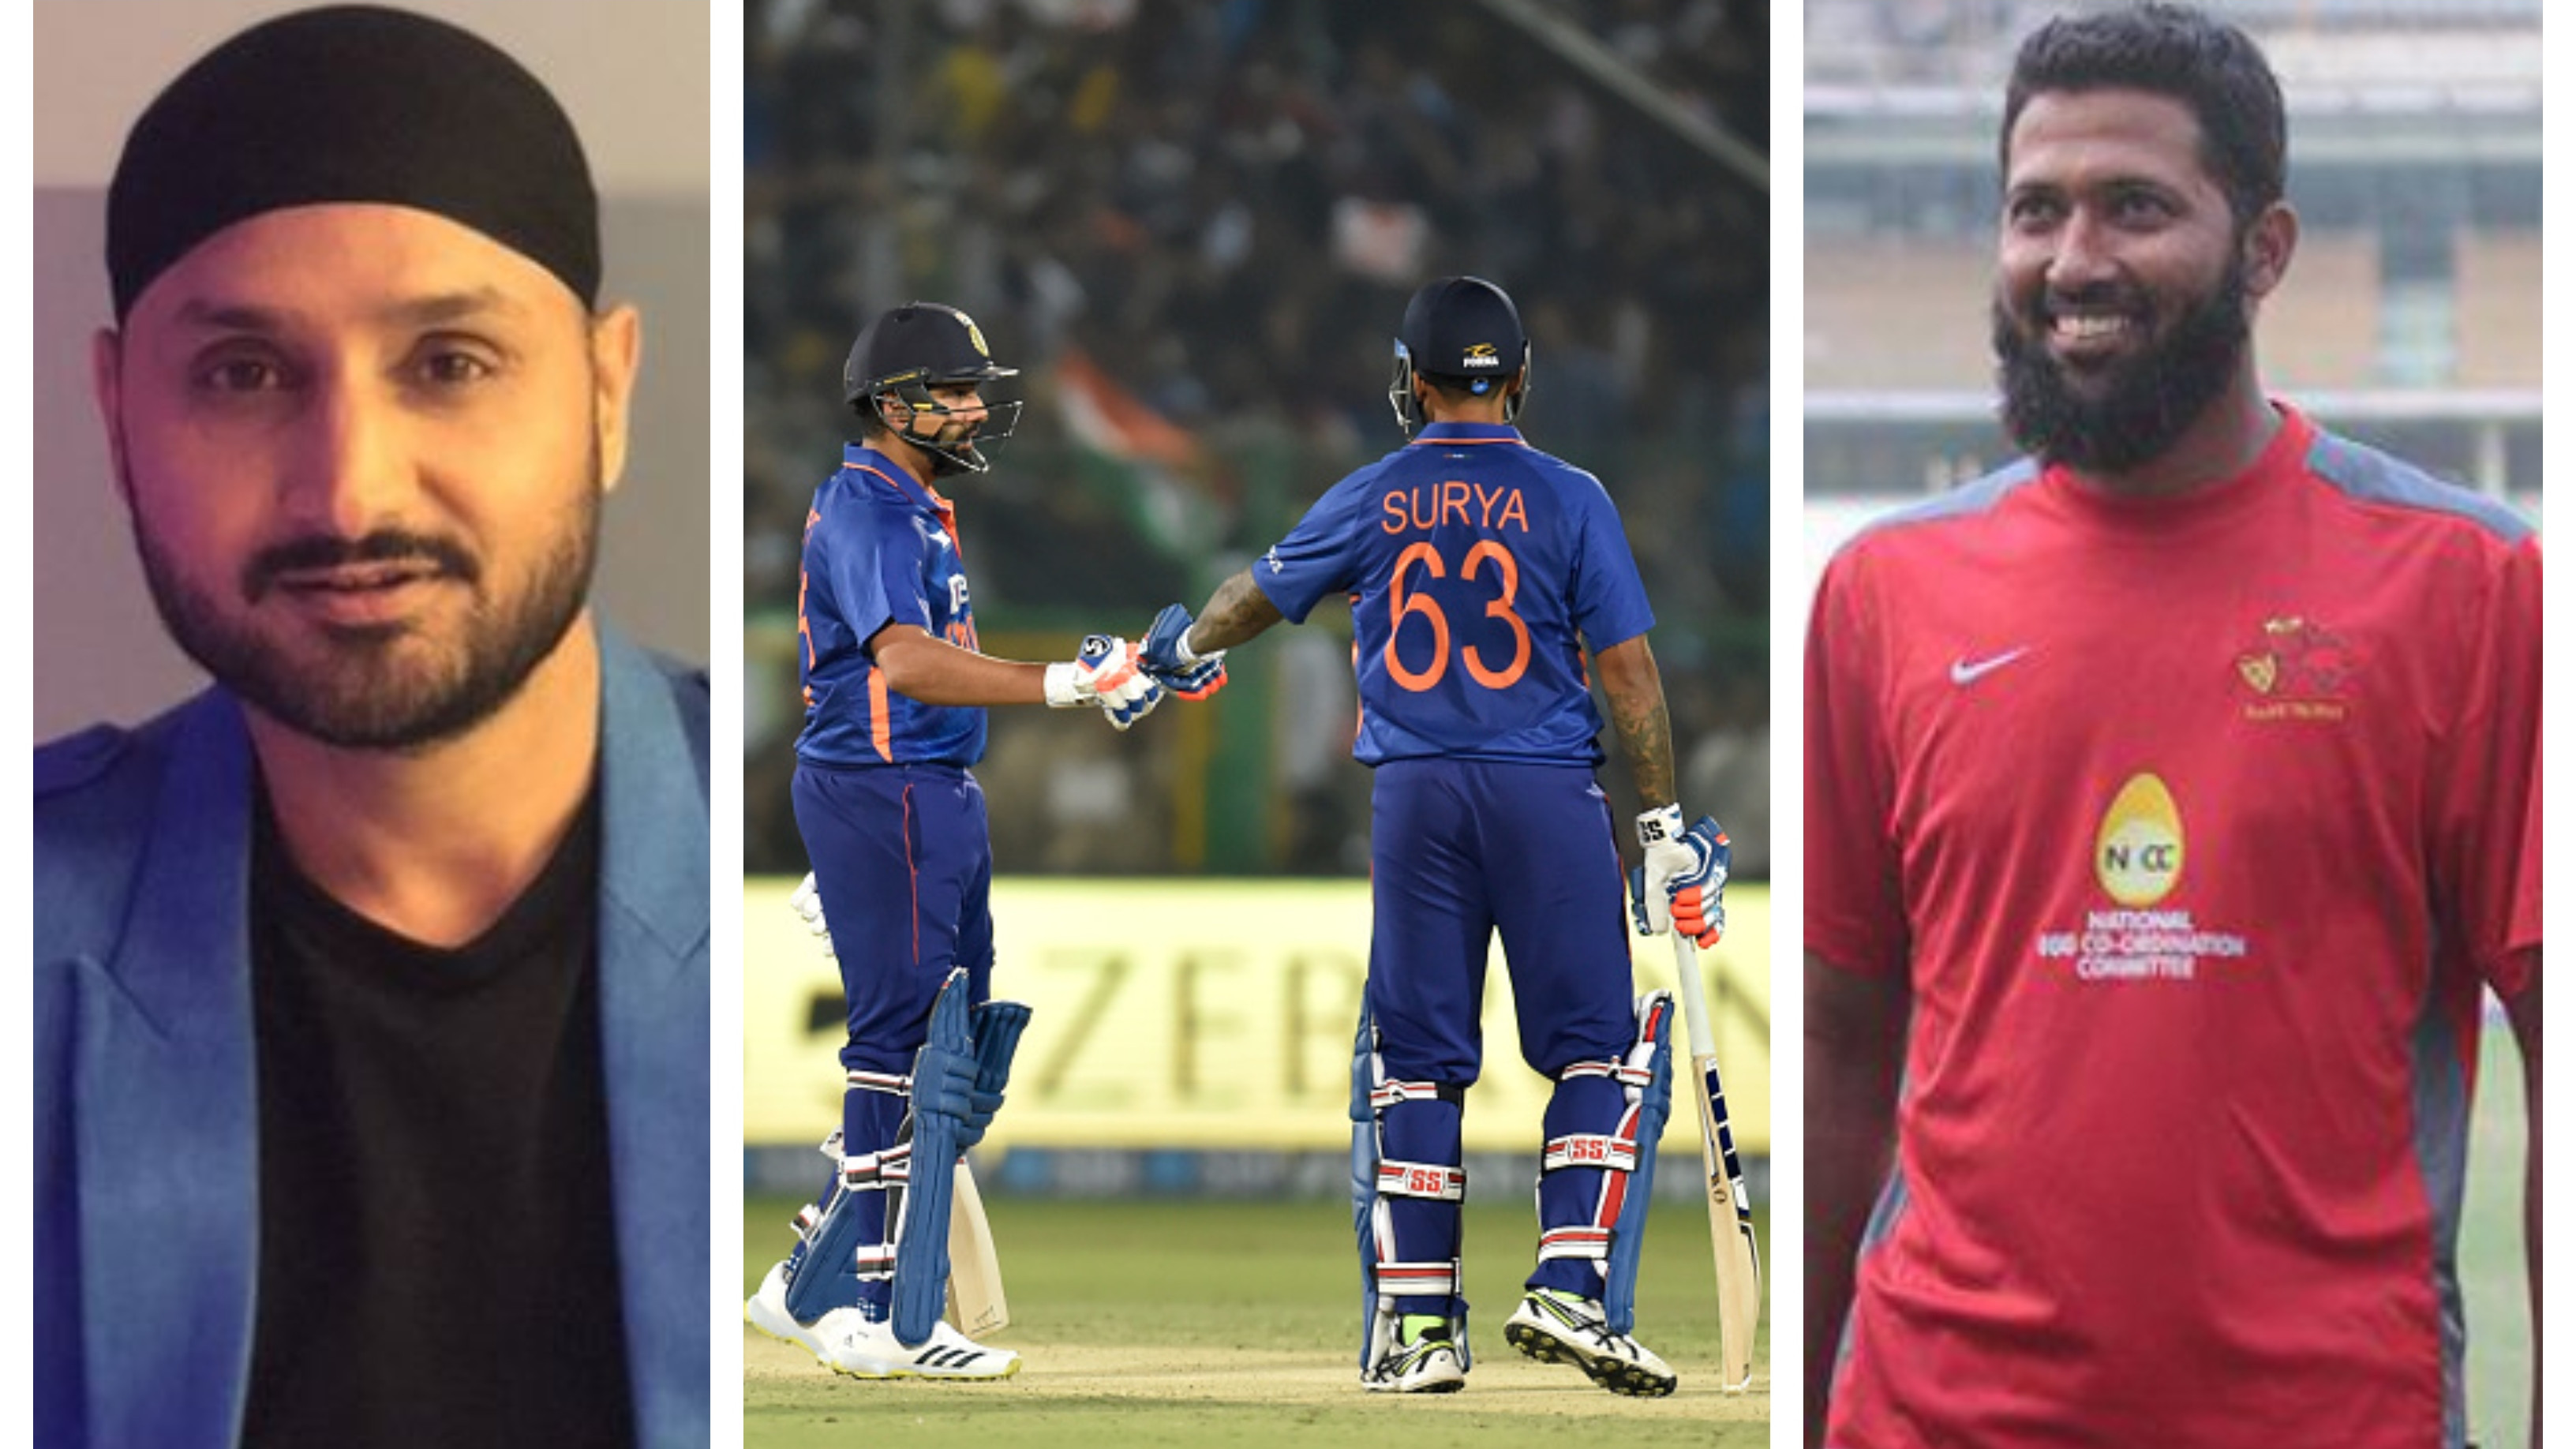 IND v NZ 2021: Cricket fraternity reacts as Suryakumar Yadav, Rohit Sharma script India’s tense win in 1st T20I